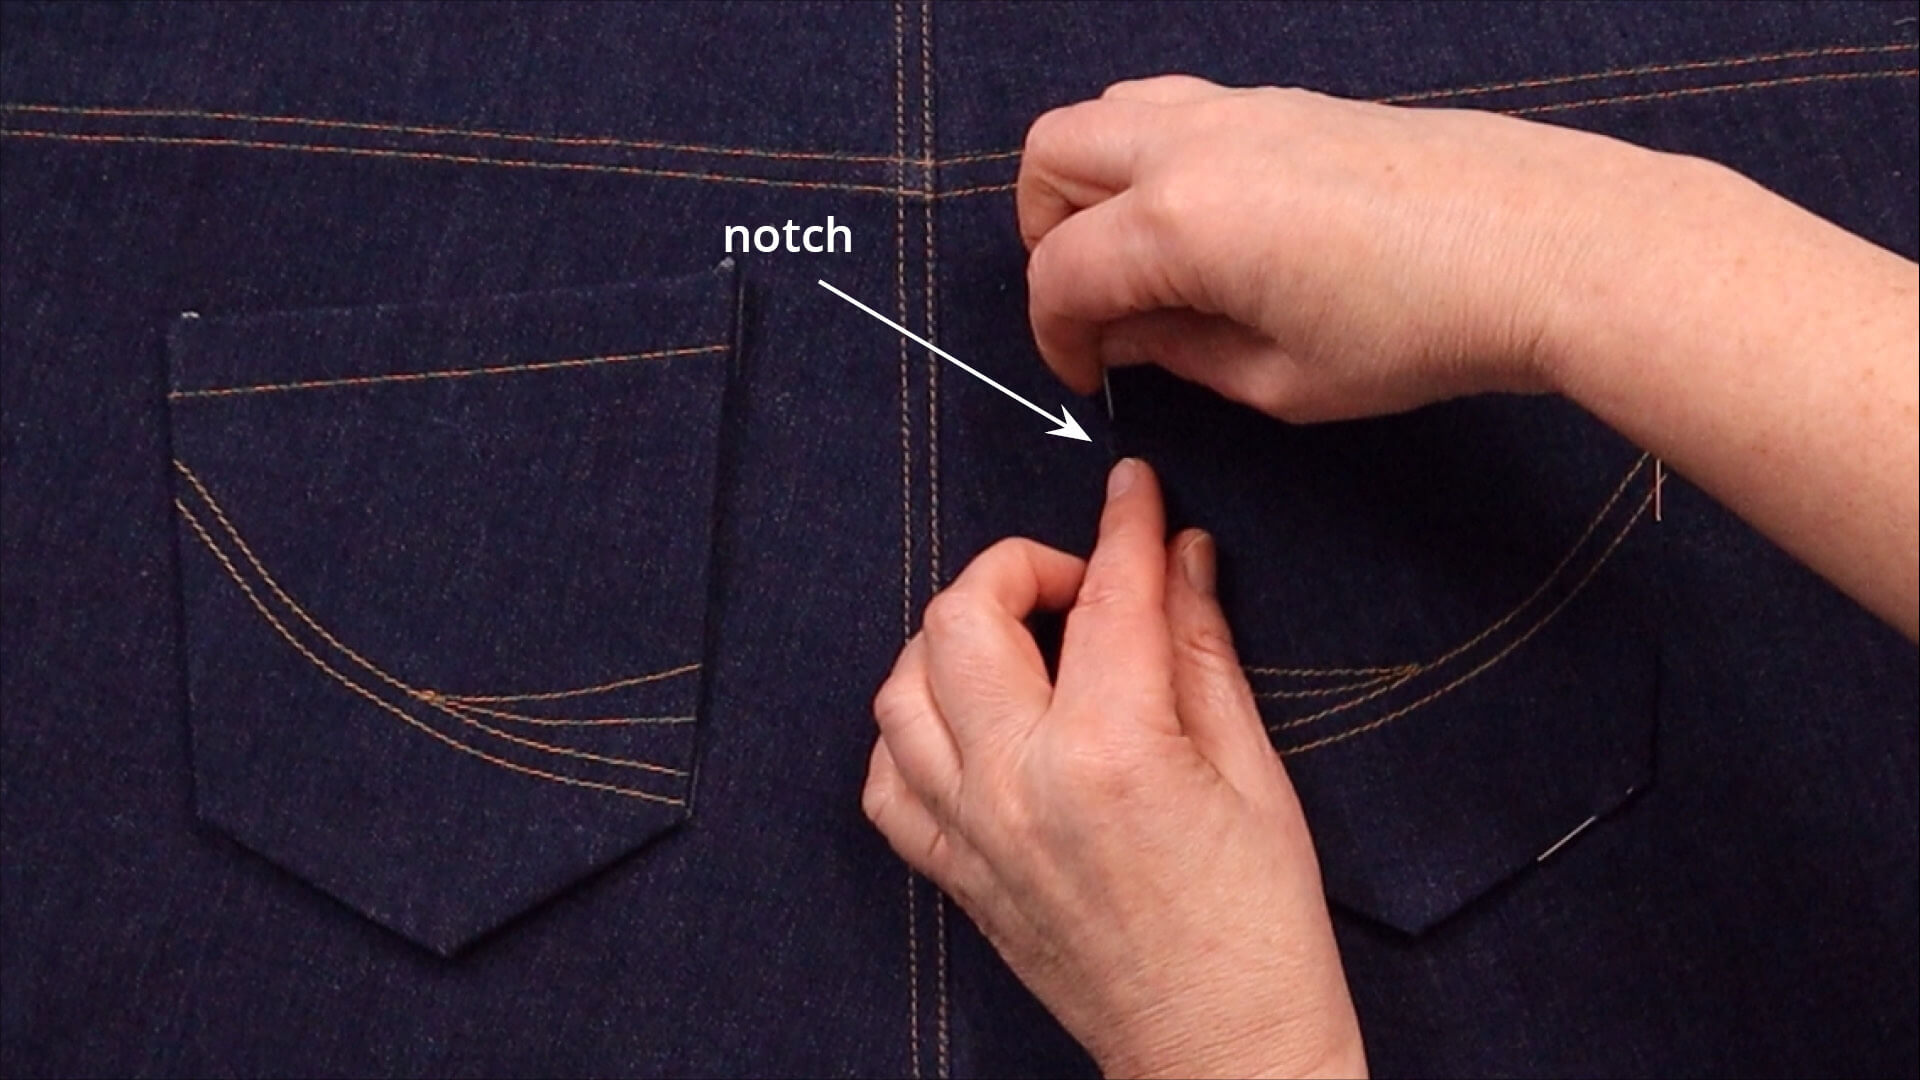 smartPATTERN sewing instructions for back patch pocket on denim pants- pockets placed on pants